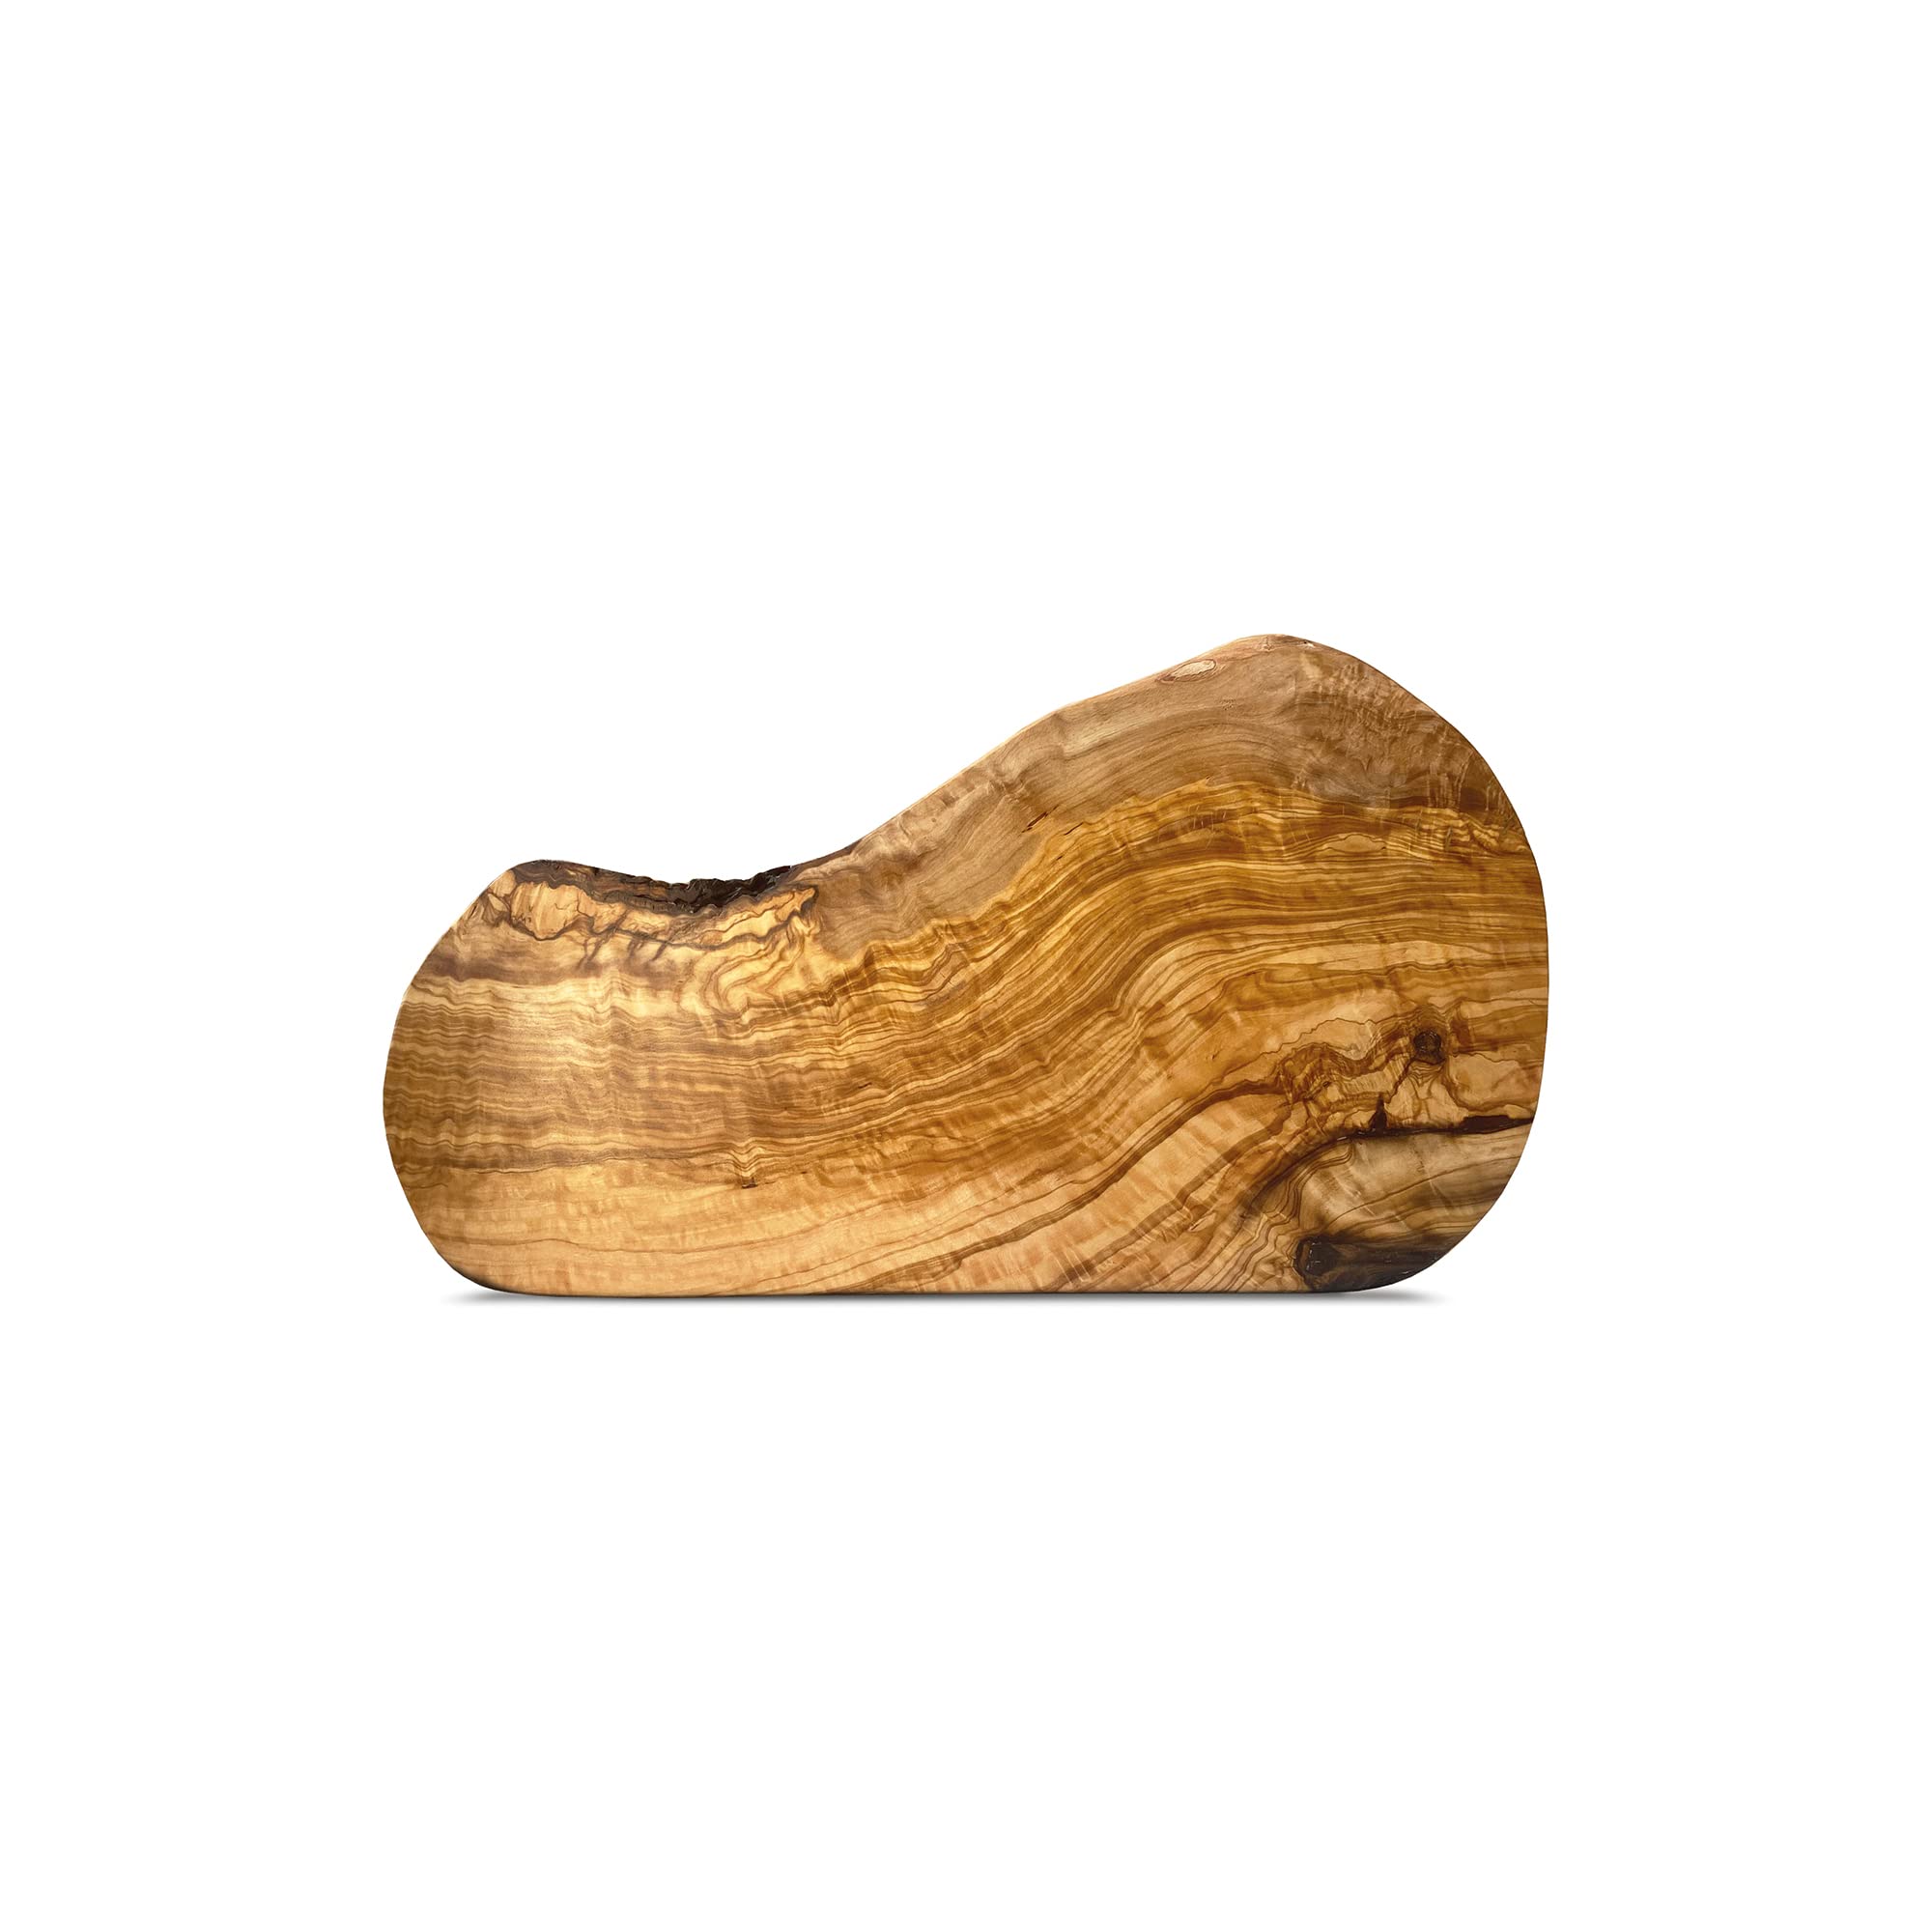 DYARI Personalized Cutting Board – 100% Natural Olive Wood Cutting Board – Premium Eco-Friendly Tunisian Rustic Serving Board – Laser Engraved Live Edge Charcuterie Board (Design 3)